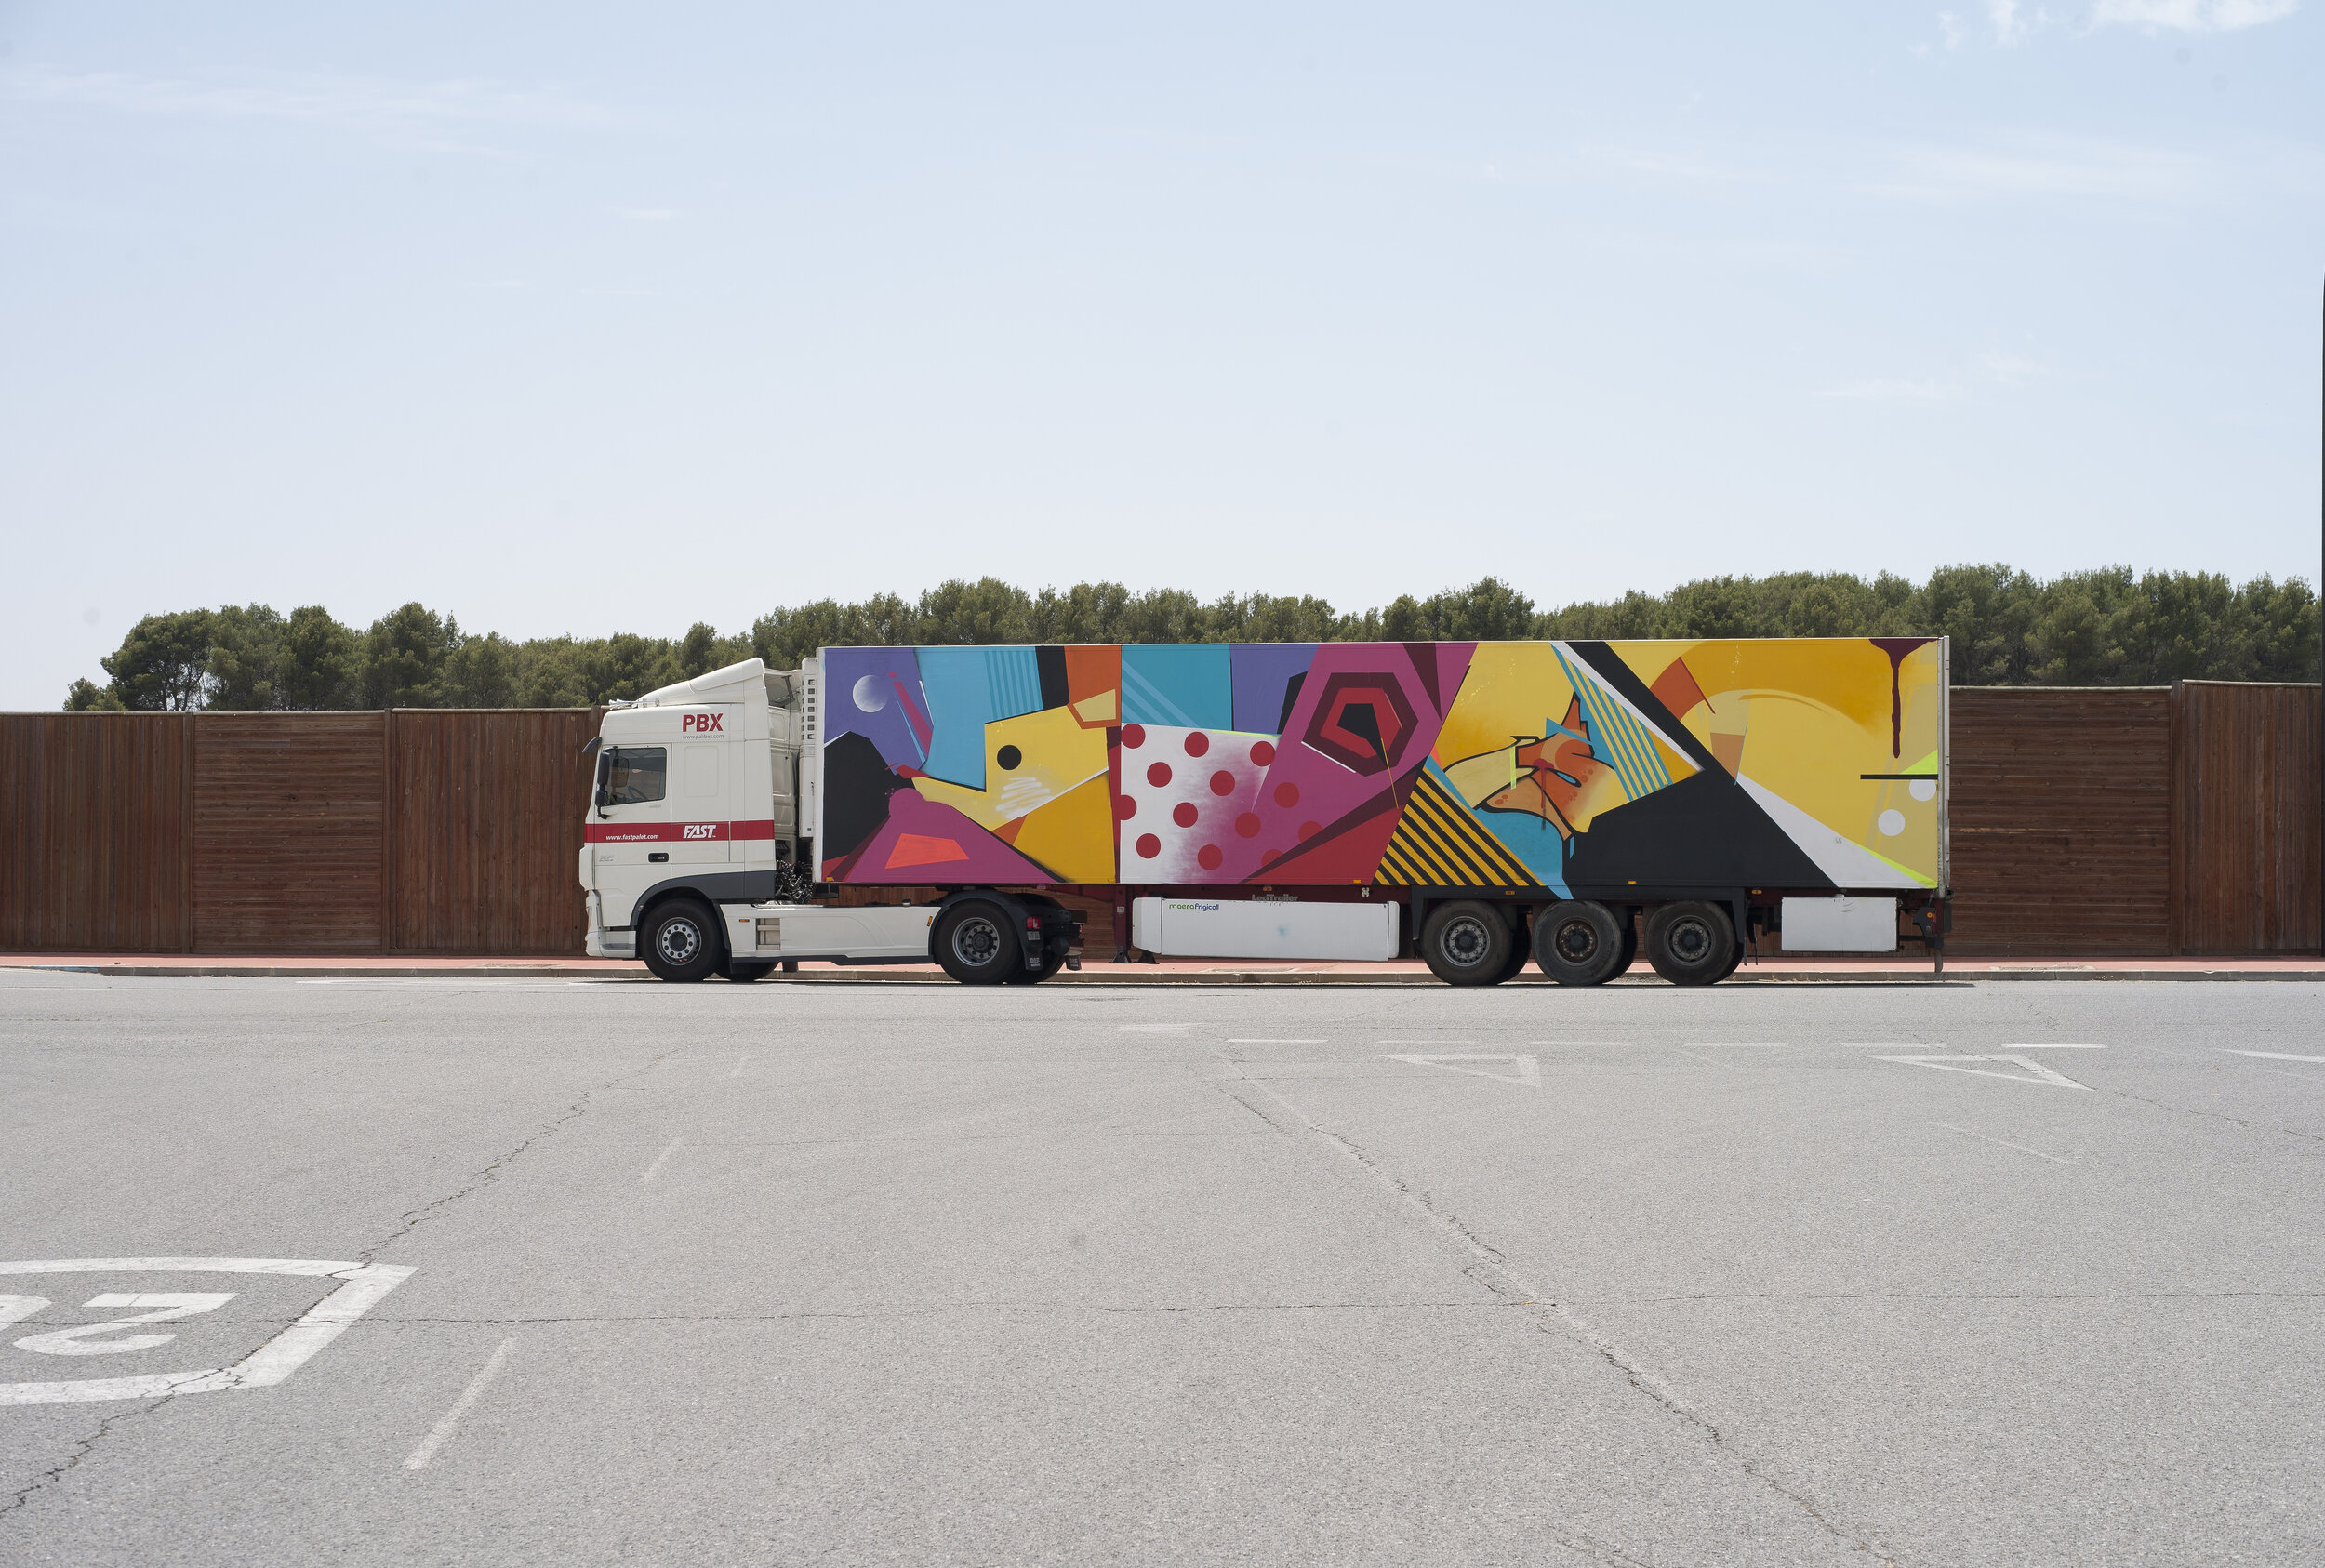 Truck Art Project, Madrid